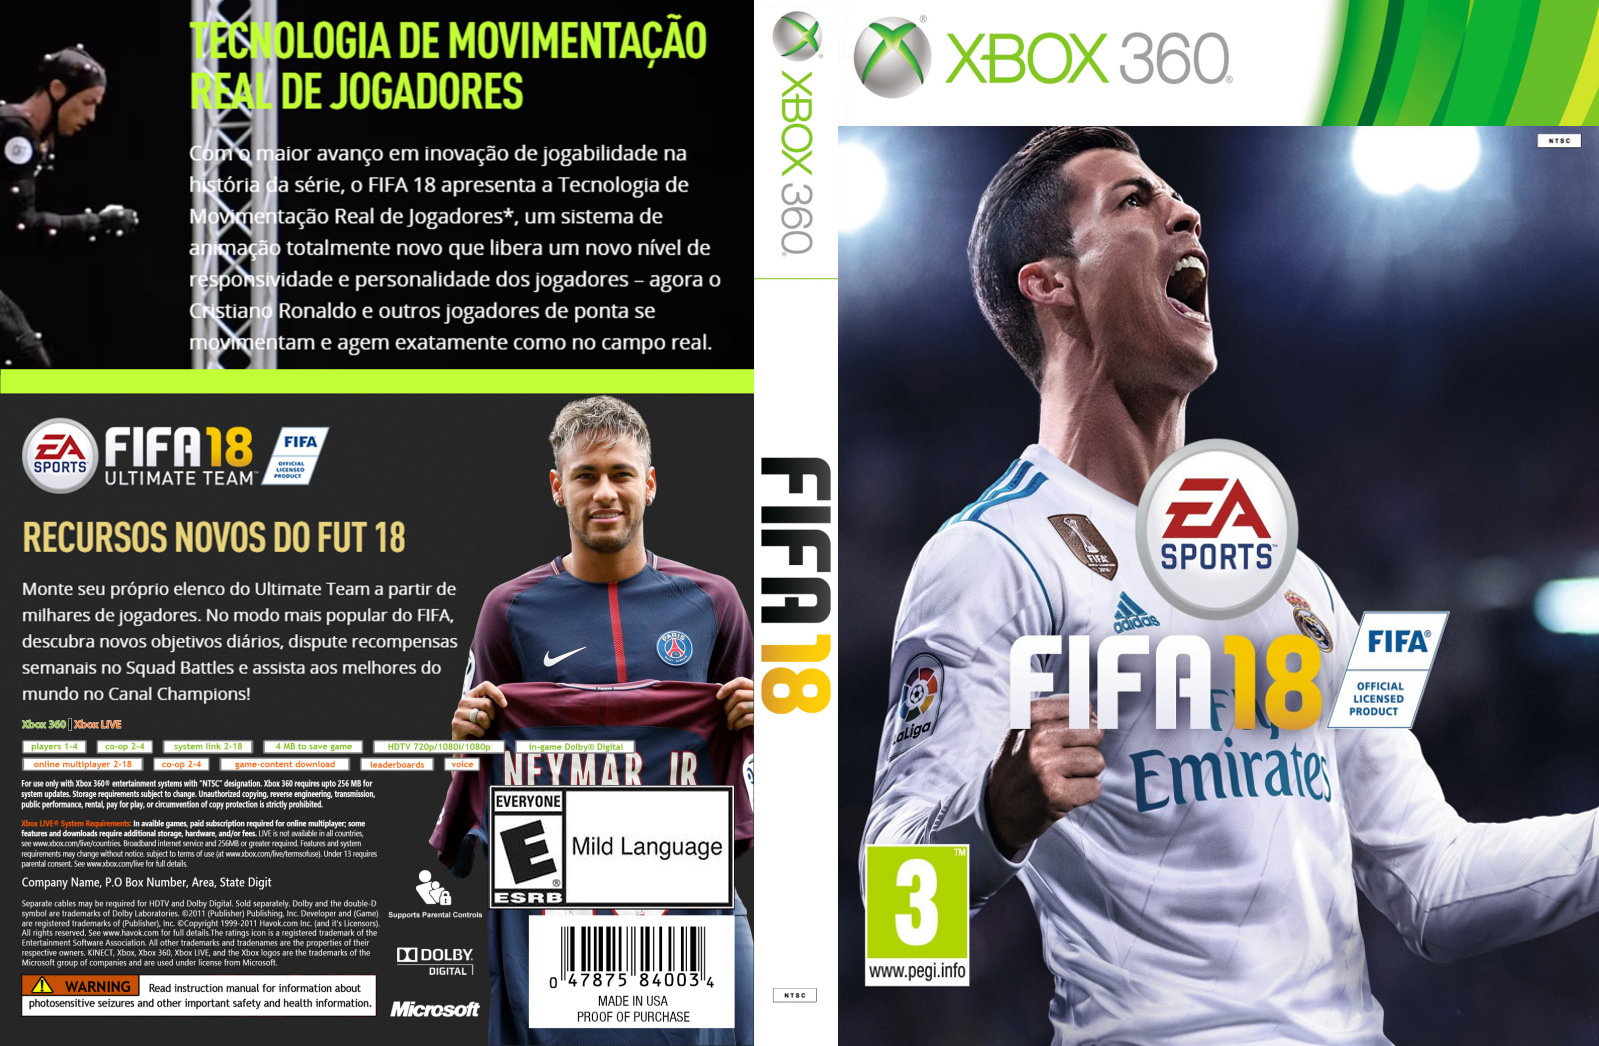 360 fifa. Обложка ФИФА 19 Xbox 360. FIFA 18 Xbox 360 обложка. ФИФА 2018 хбокс 360. Обложка фифы 18 иксбокс 360.